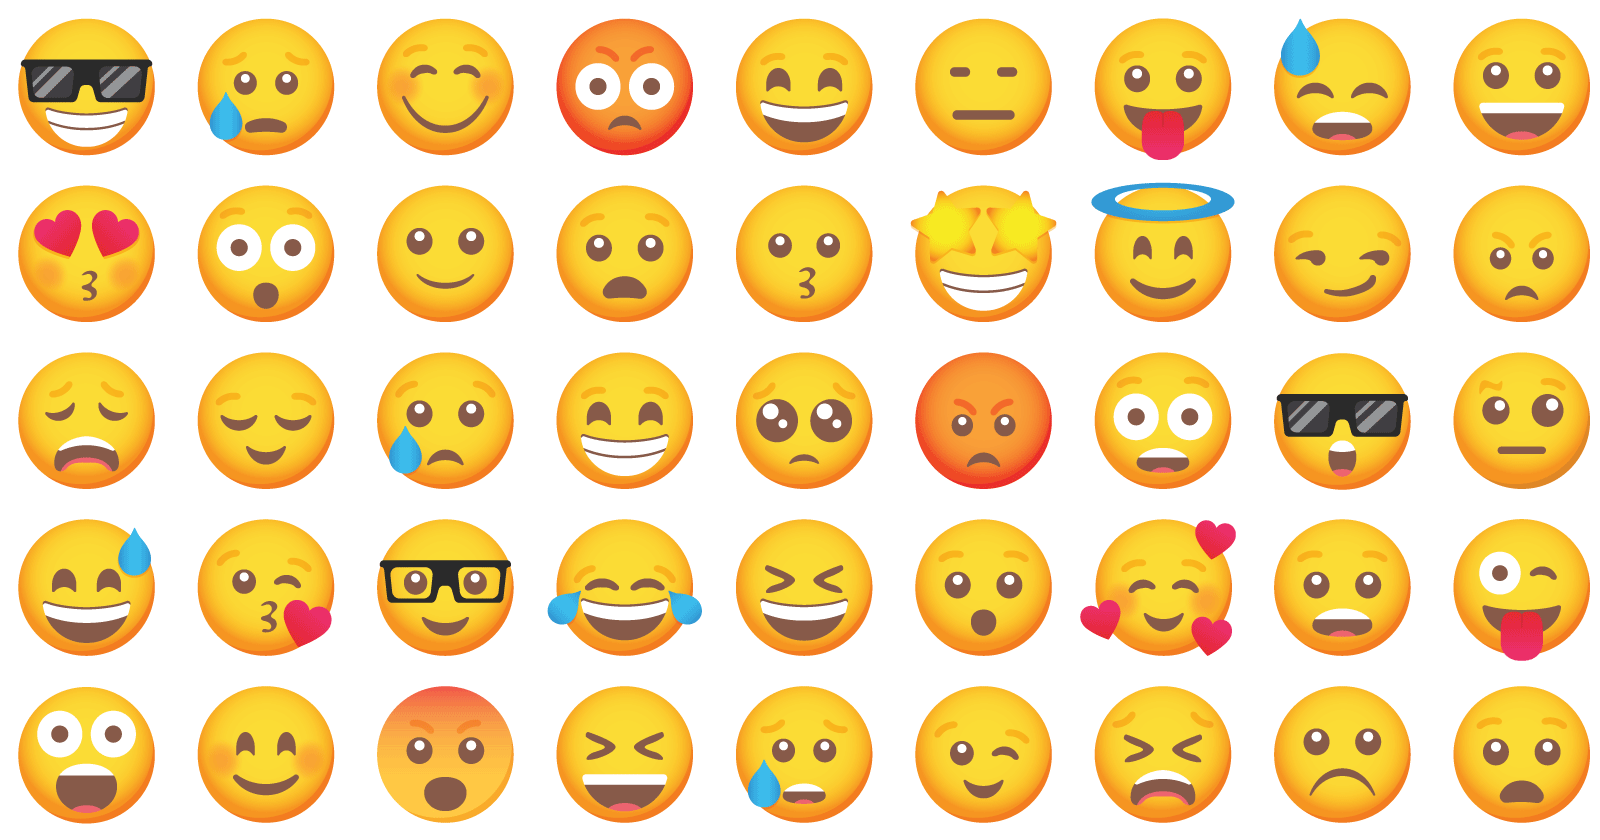 Variety of emoji faces